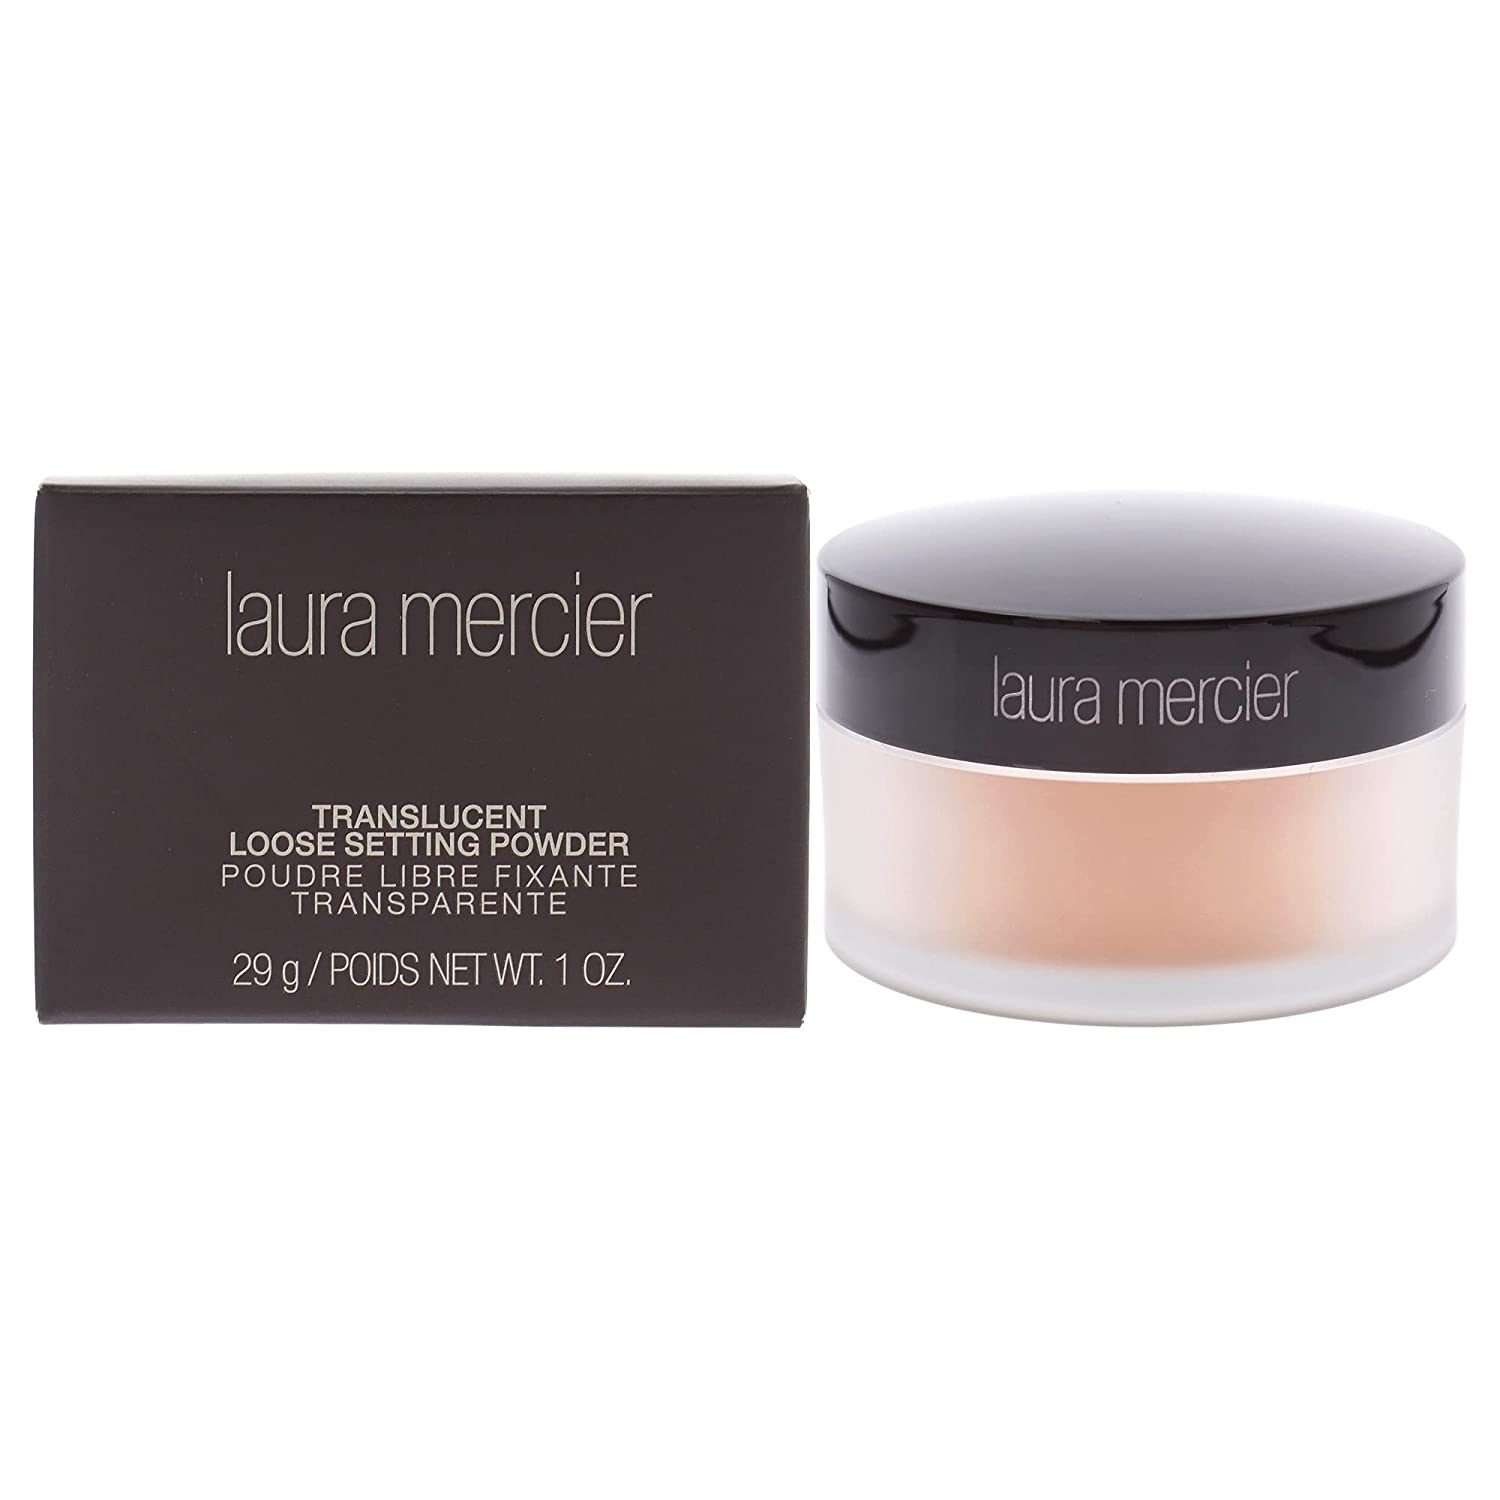 laura-mercier-translucent-loose-setting-powder-poudre-libre-fixante-transparente